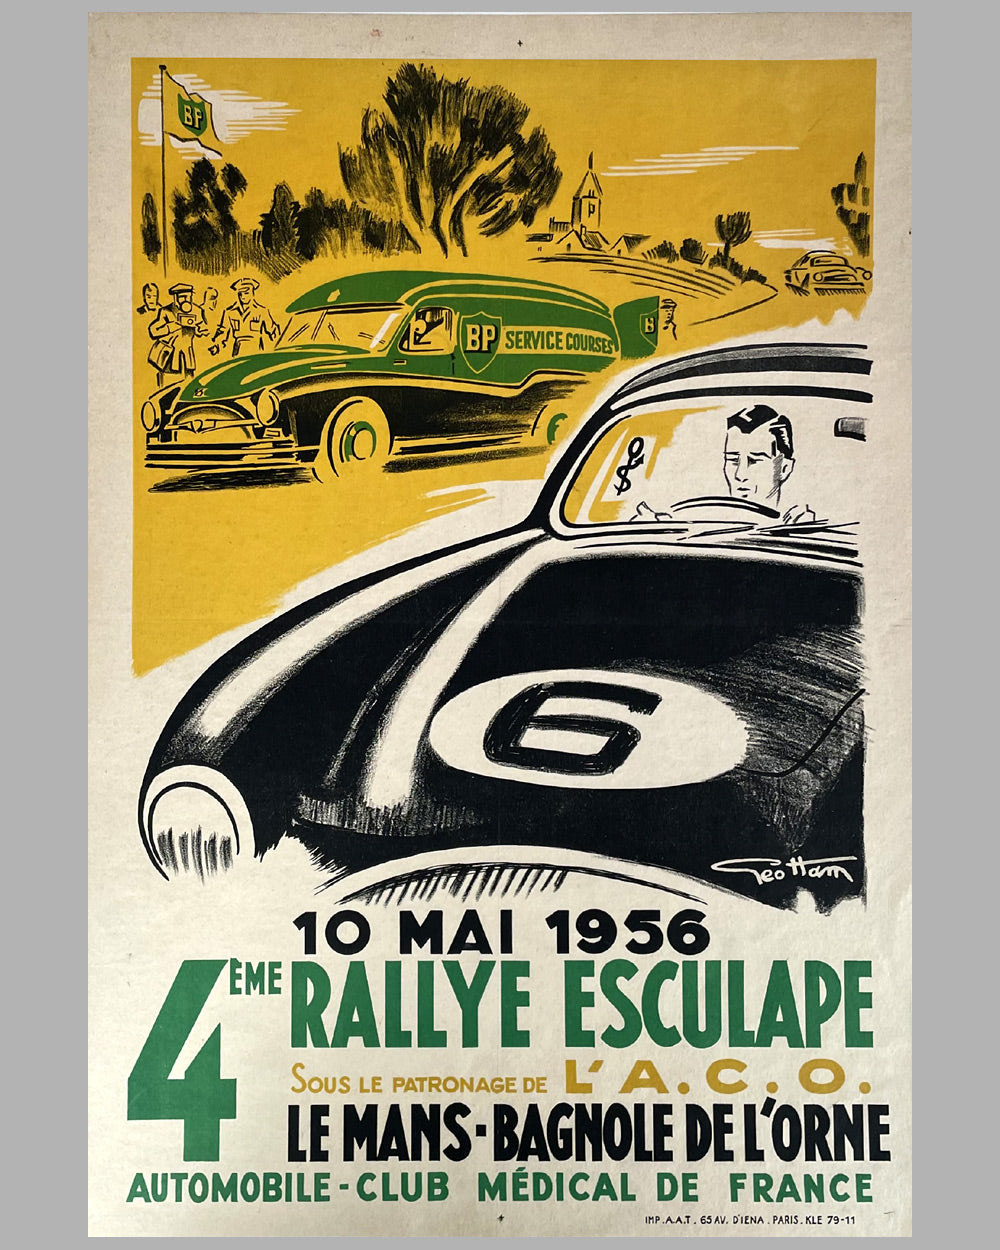 4 eme Rallye Esculape 1956 original race poster, artwork by Geo Ham